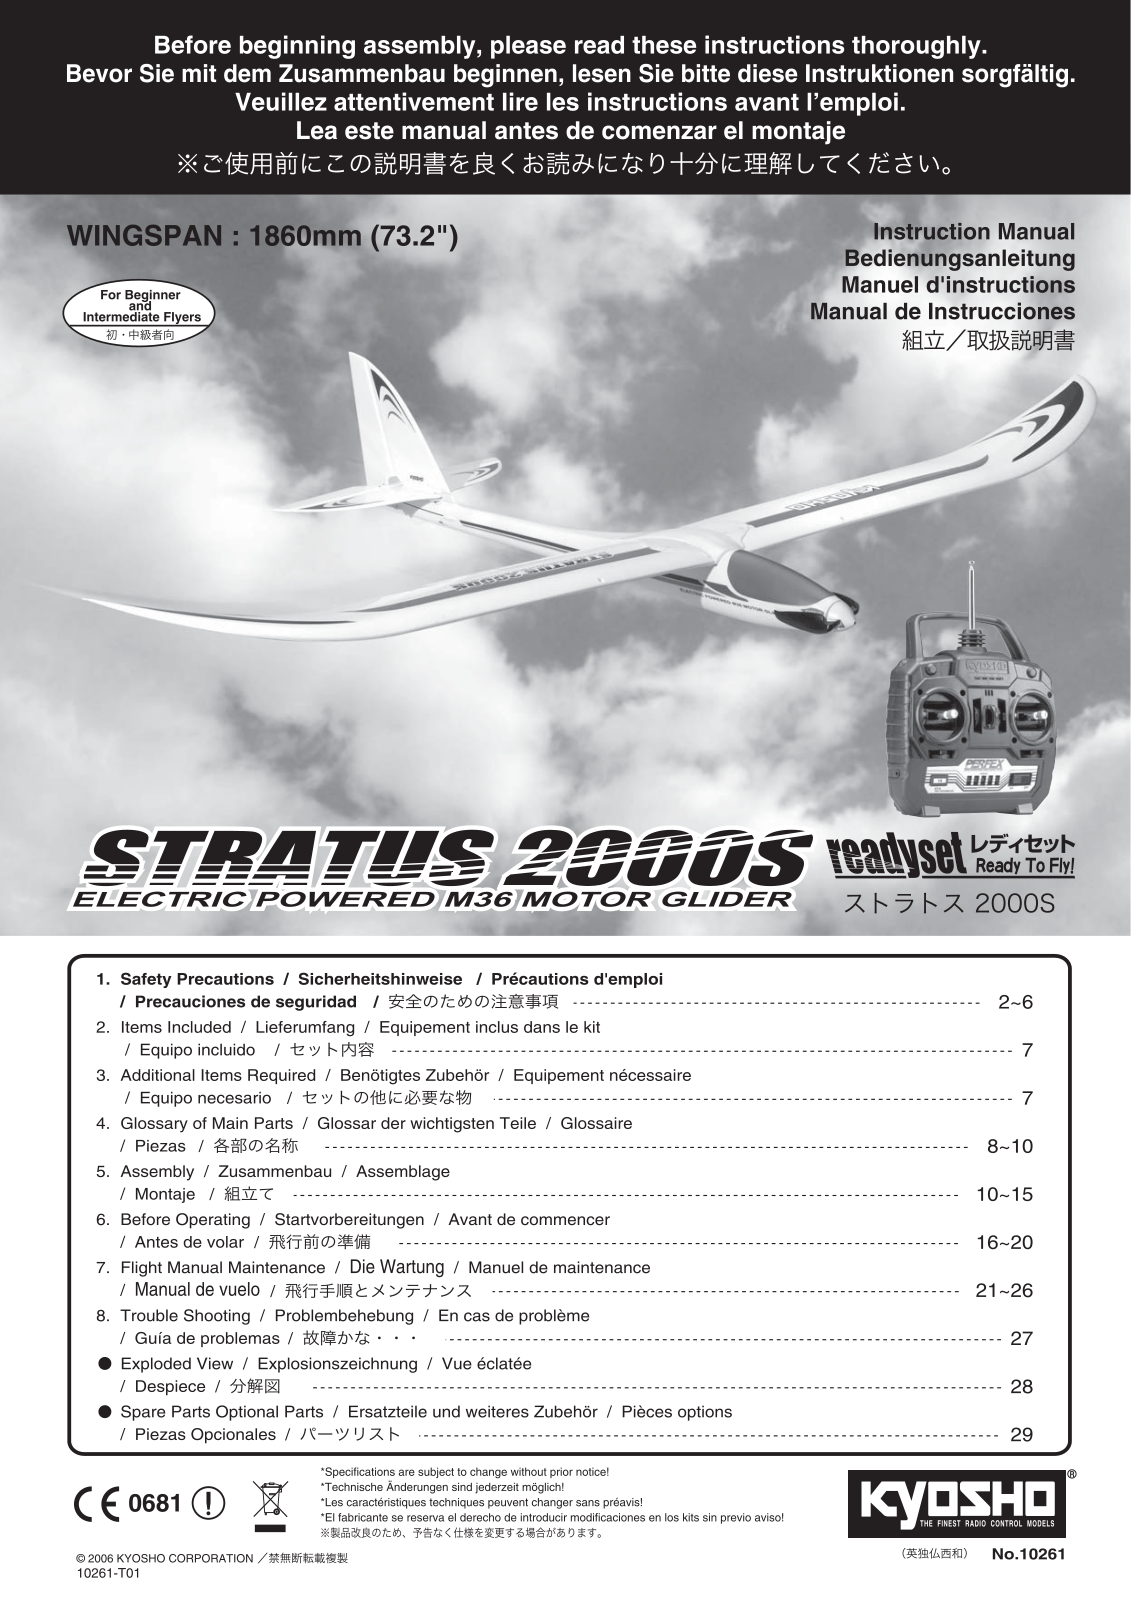 KYOSHO STRATUS 2000S User Manual